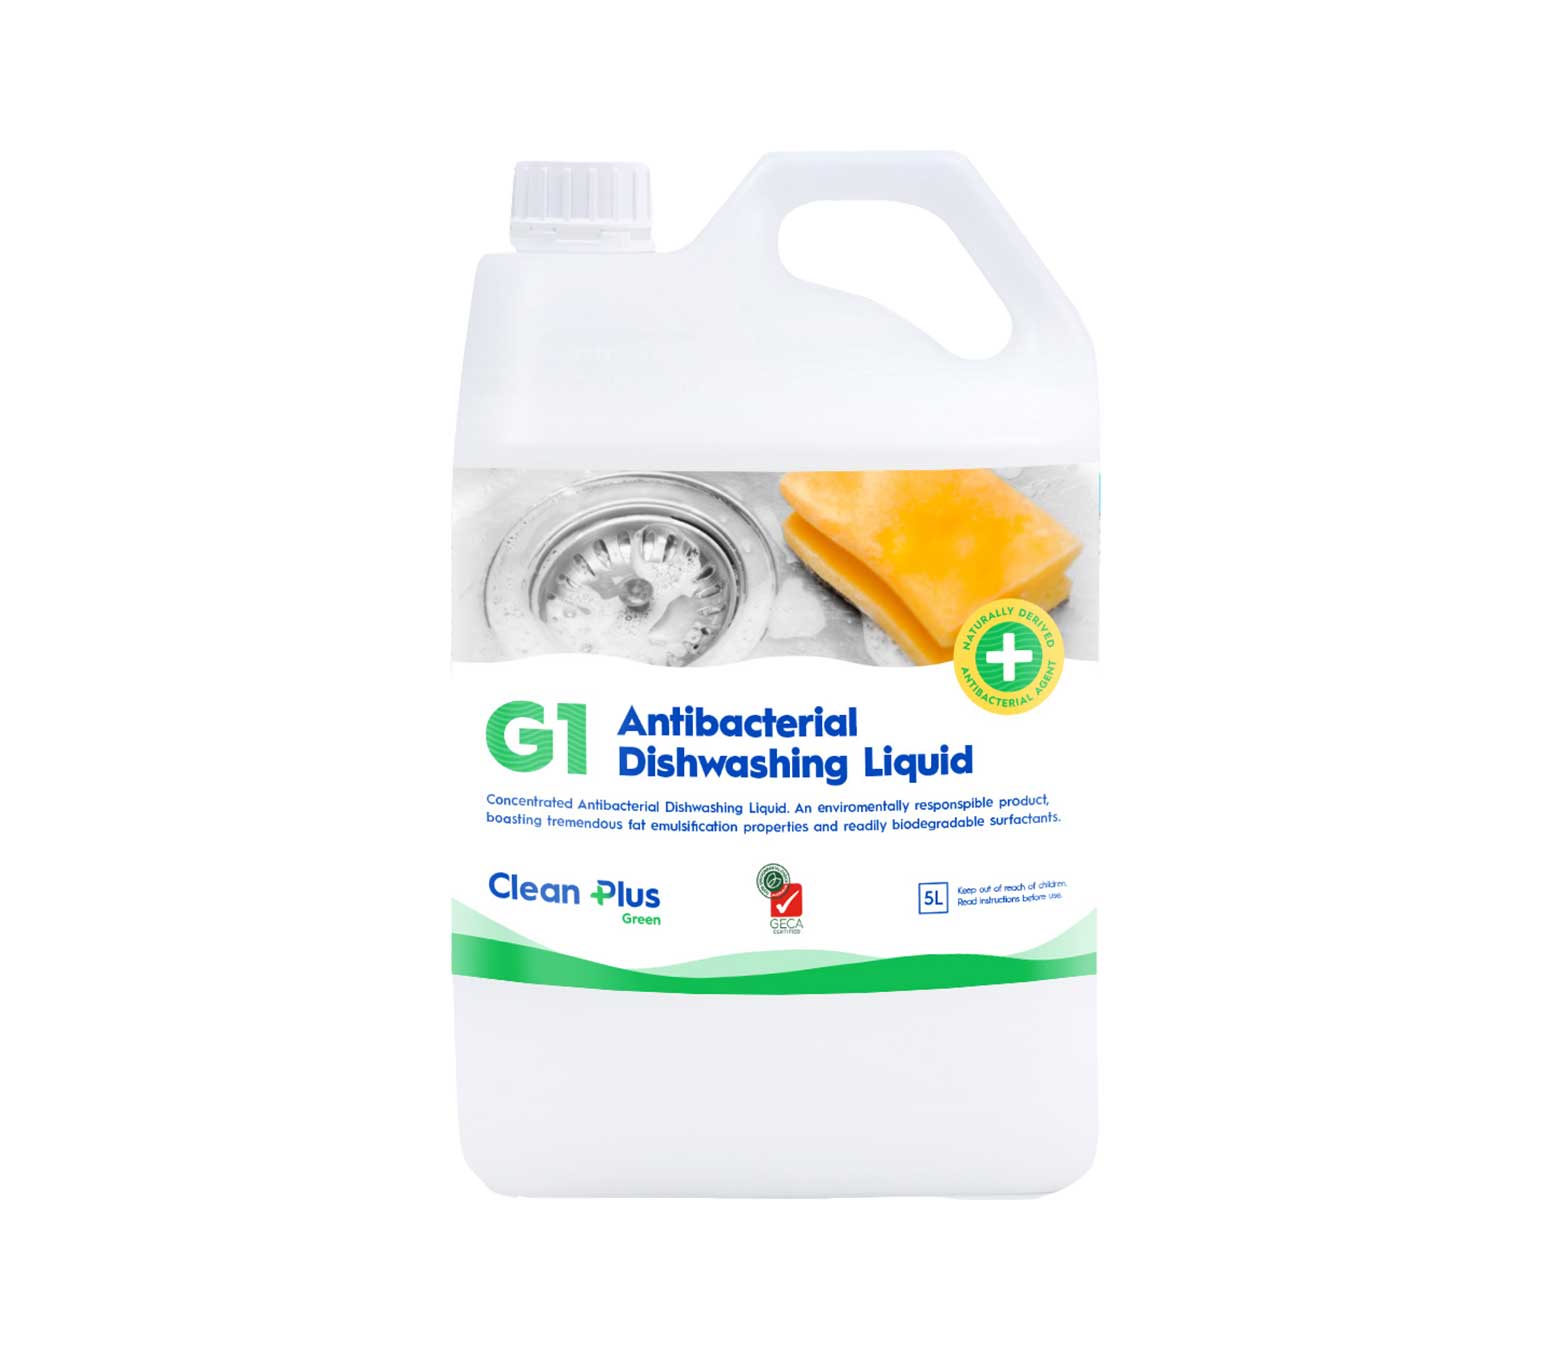 G1 Antibacterial dishwashing liquid.